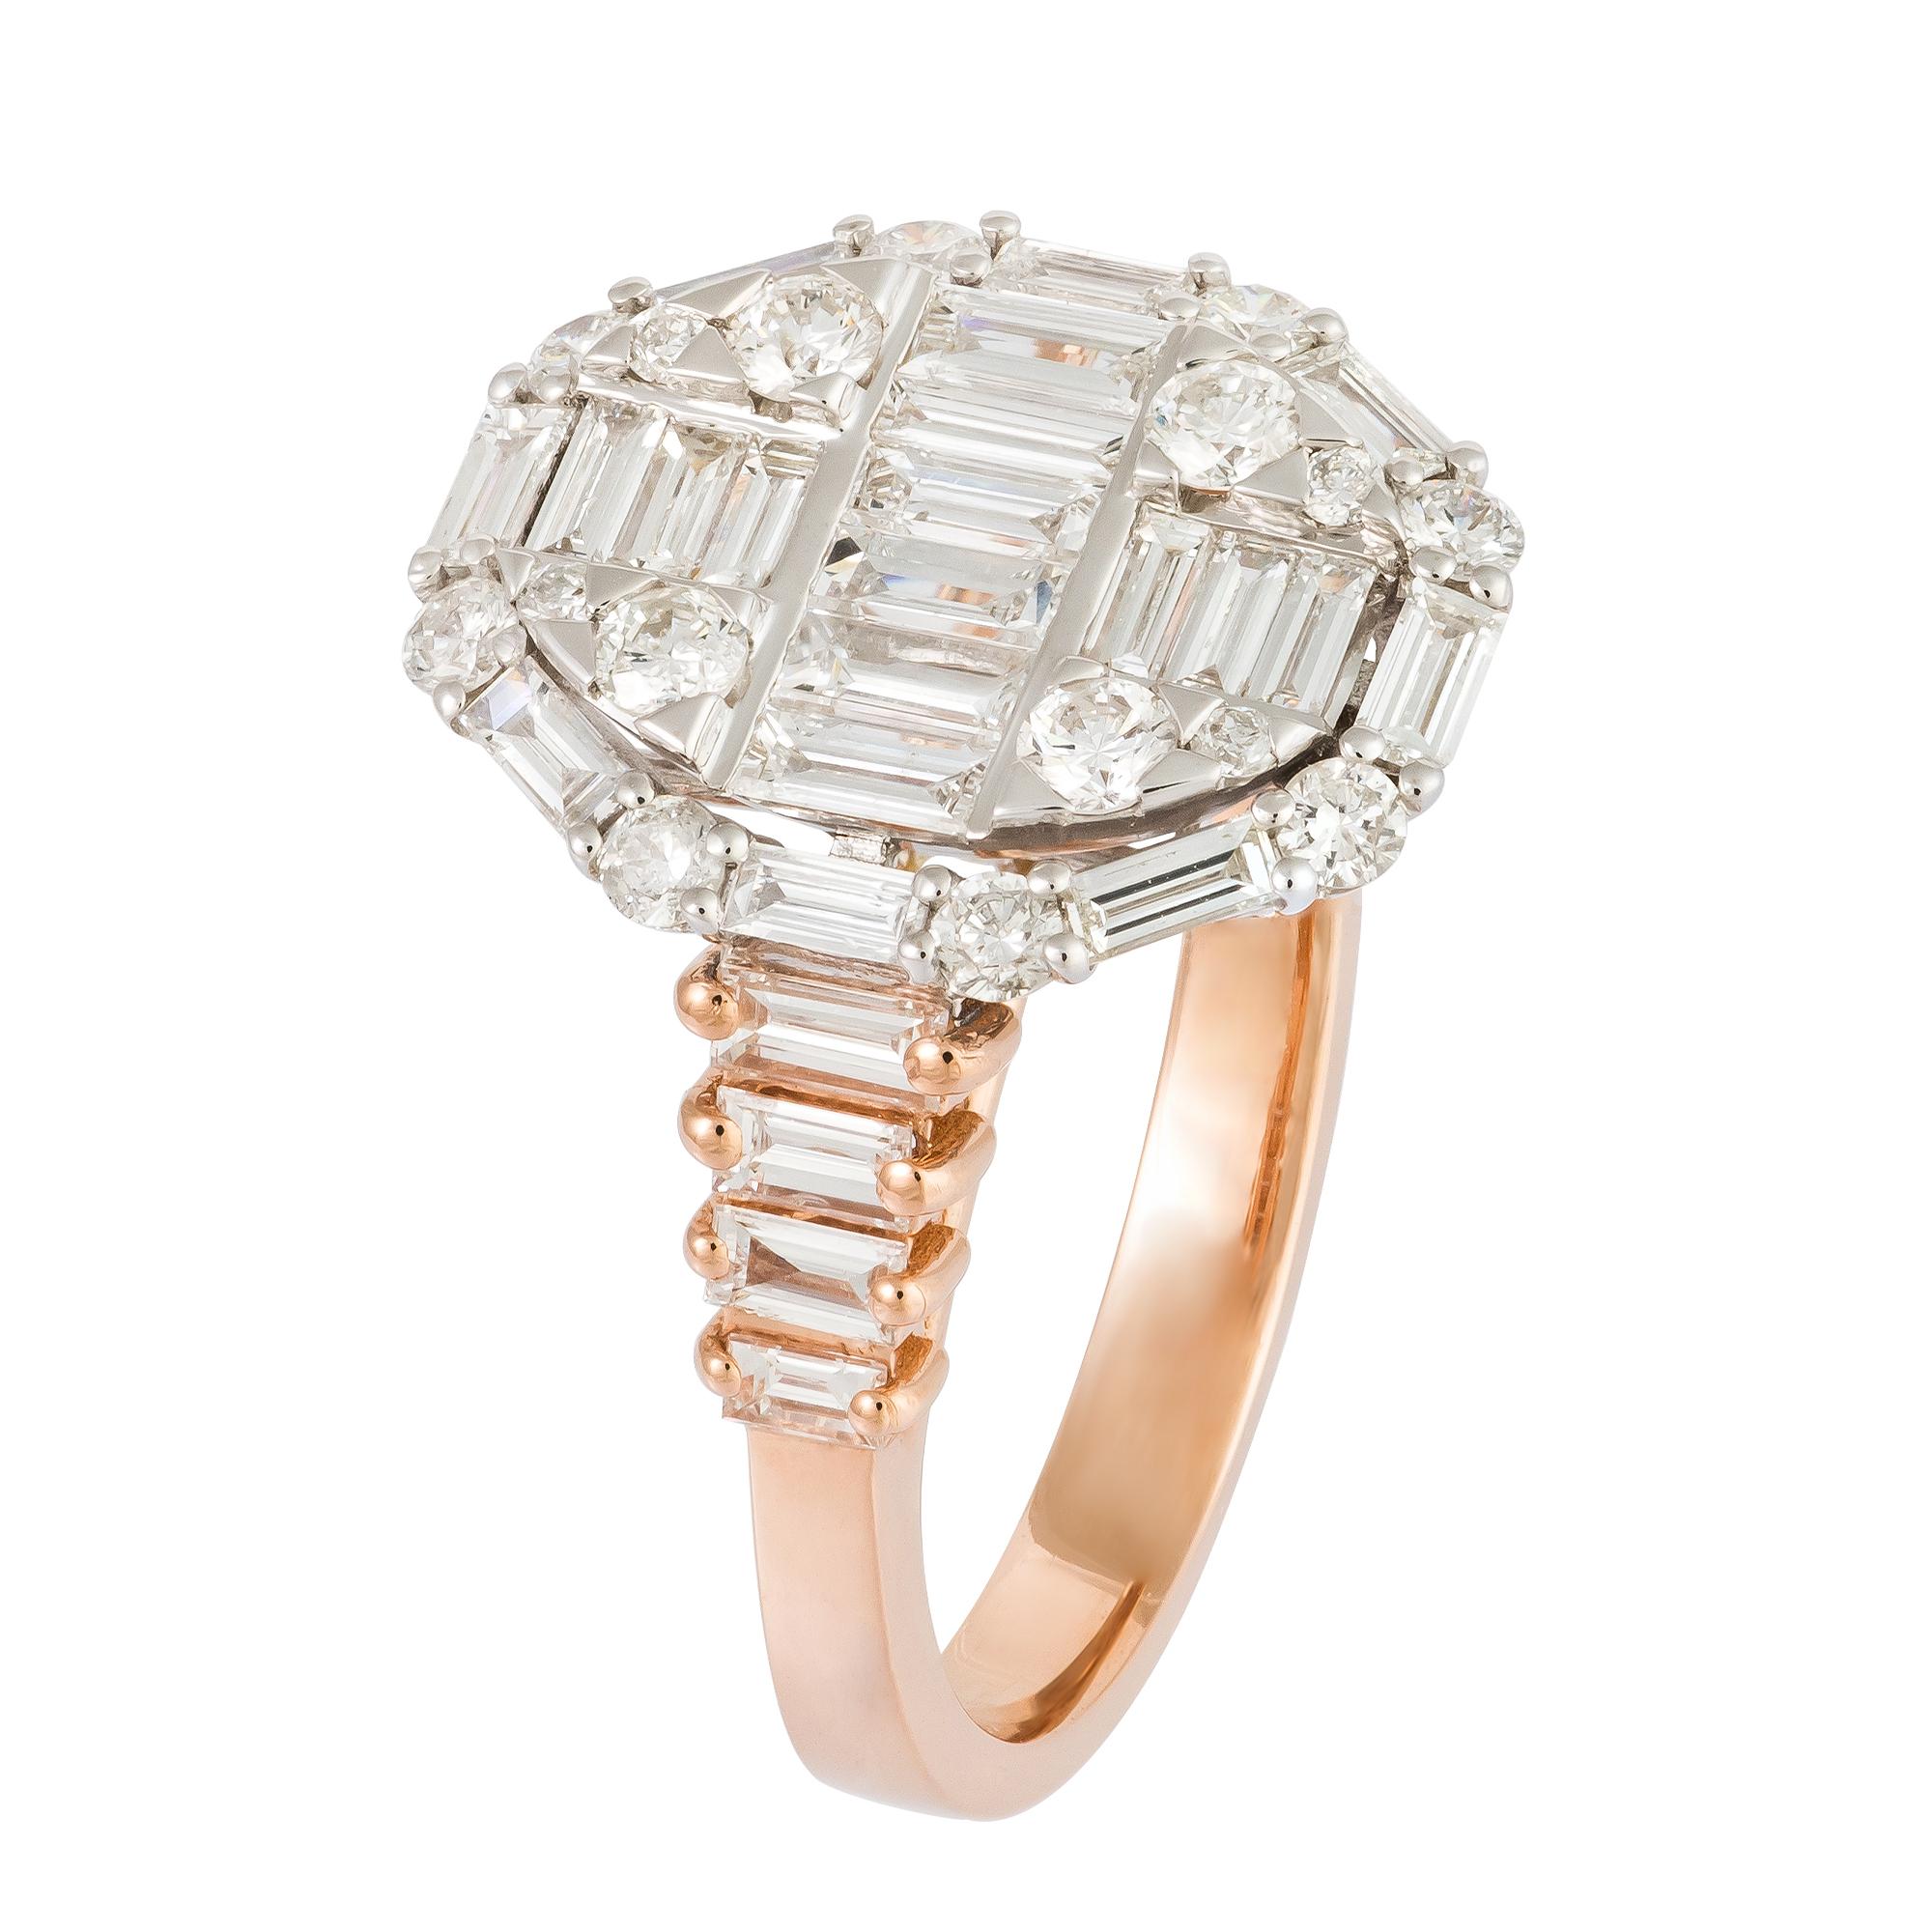 For Sale:  Impressive Pink 18K Gold White Diamond Ring For Her 4